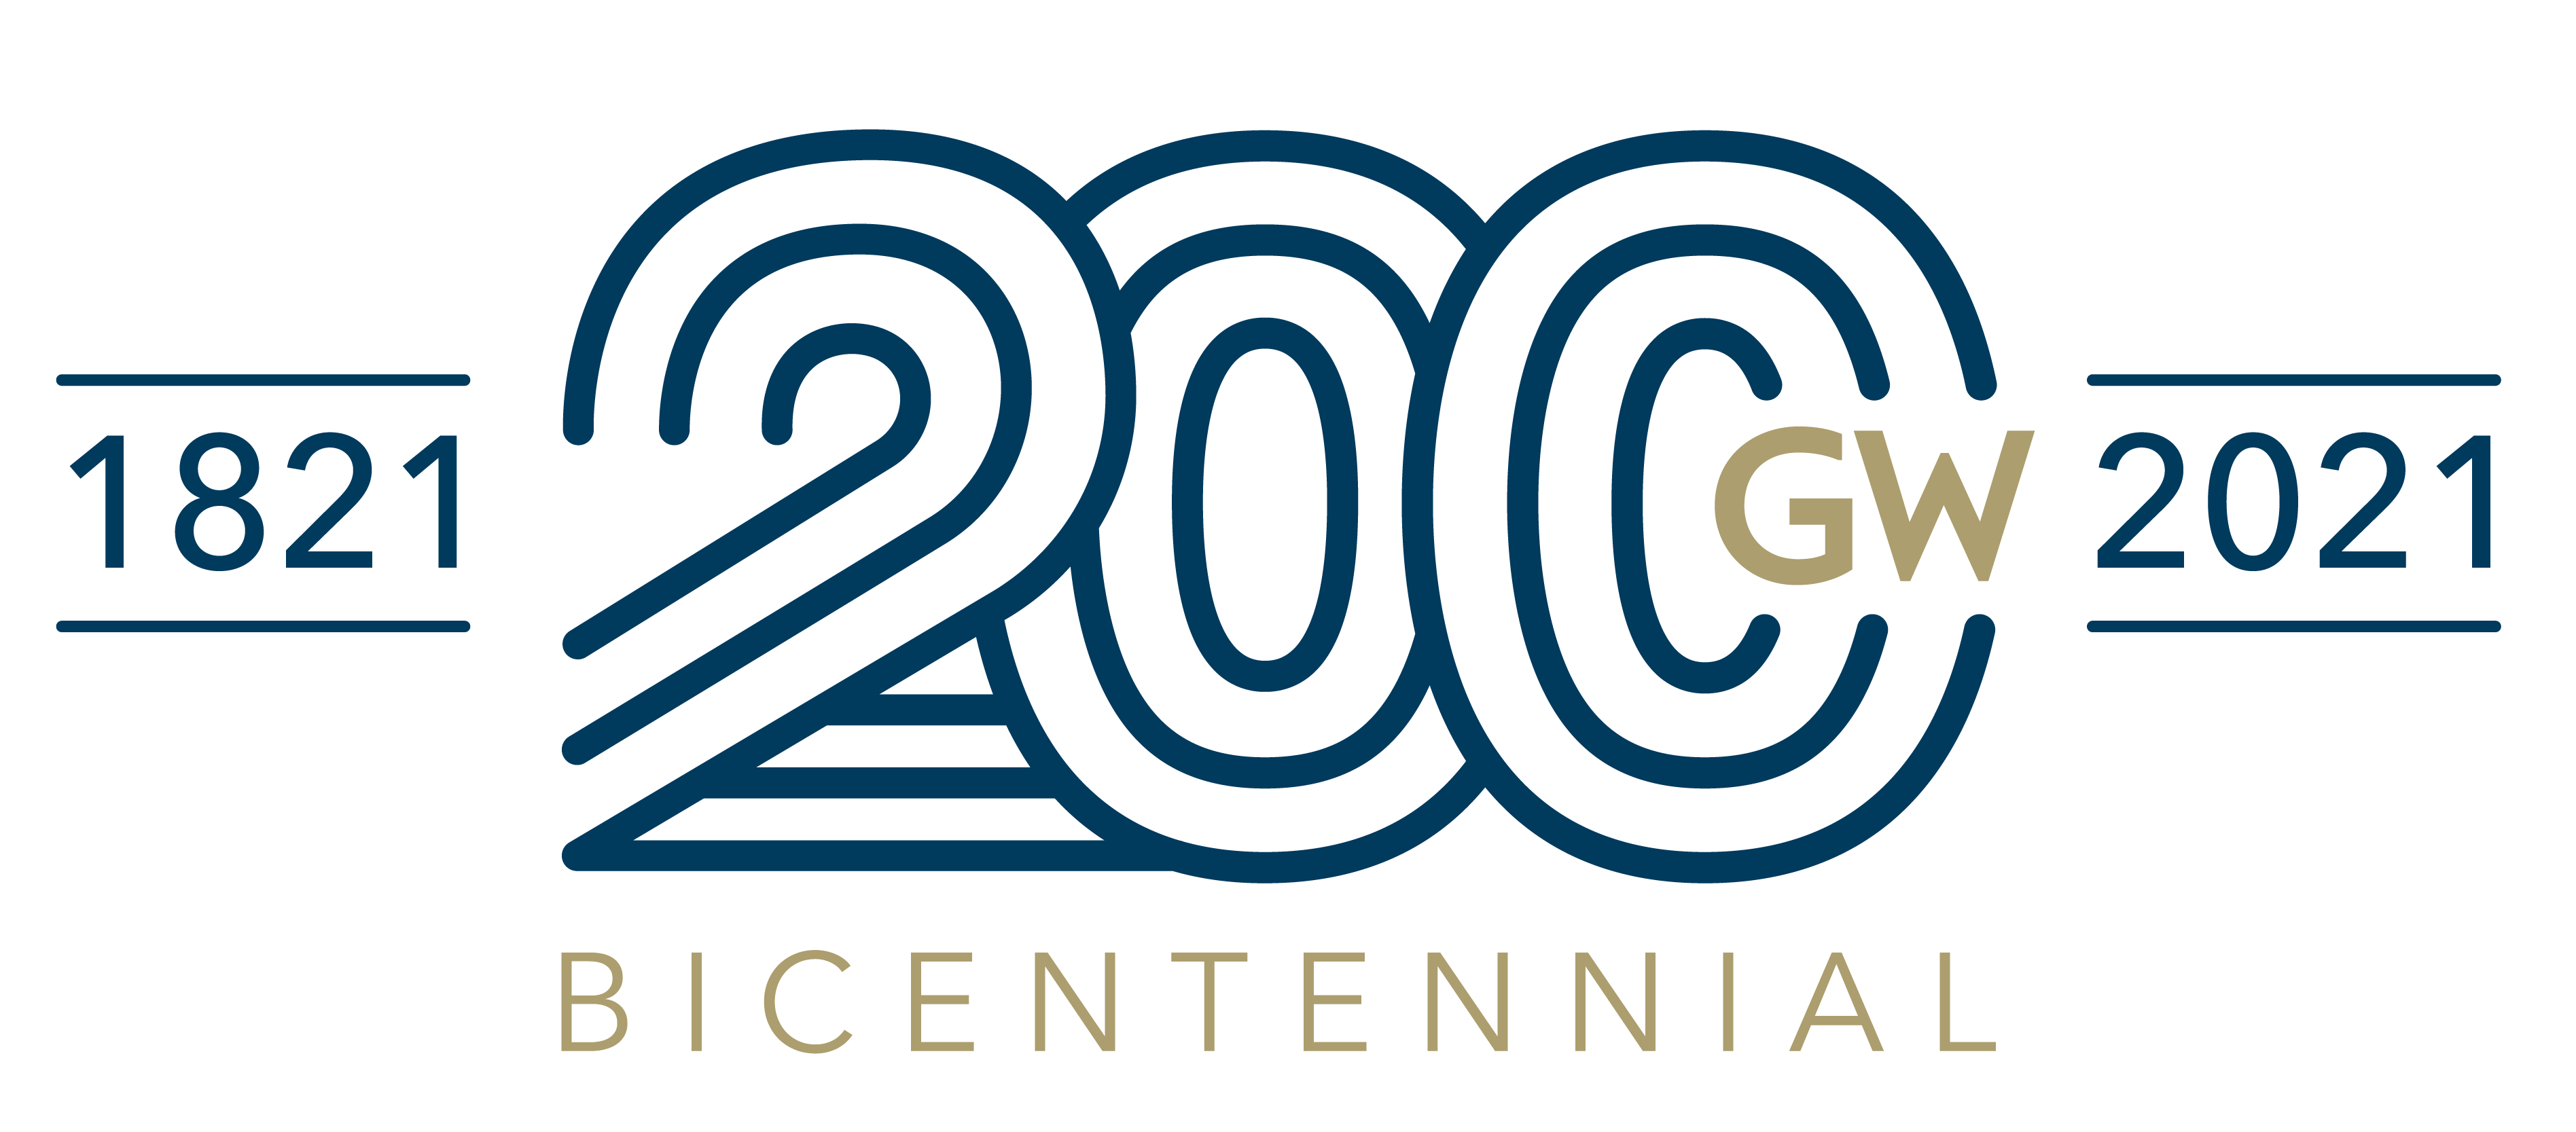 George Washington University Bicentennial Anniversary: 1821 - 2021